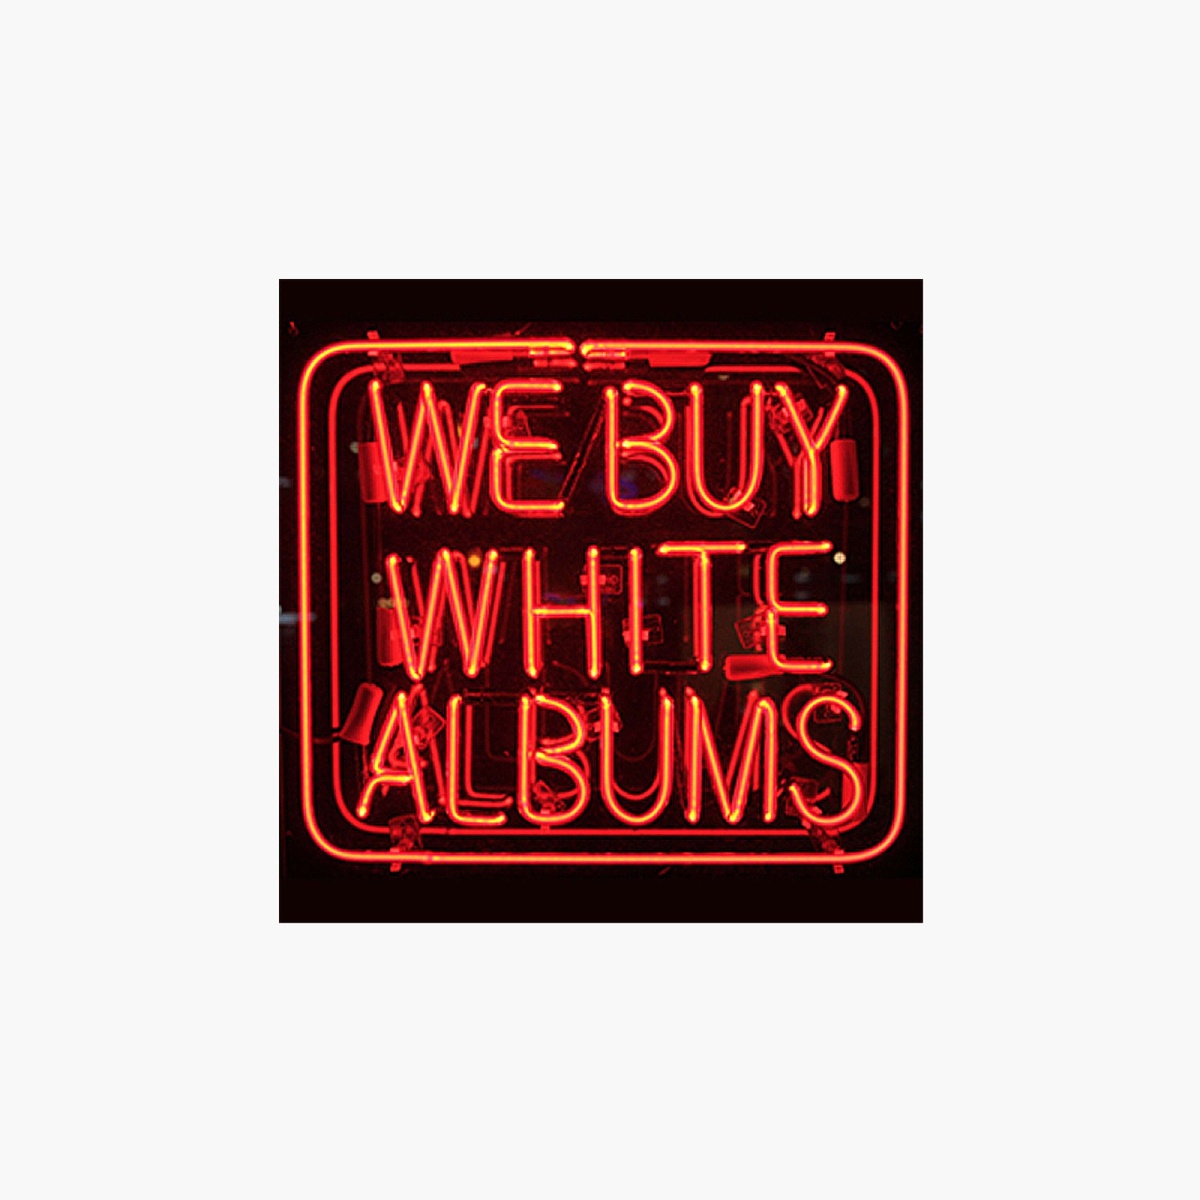 A photo of white albums